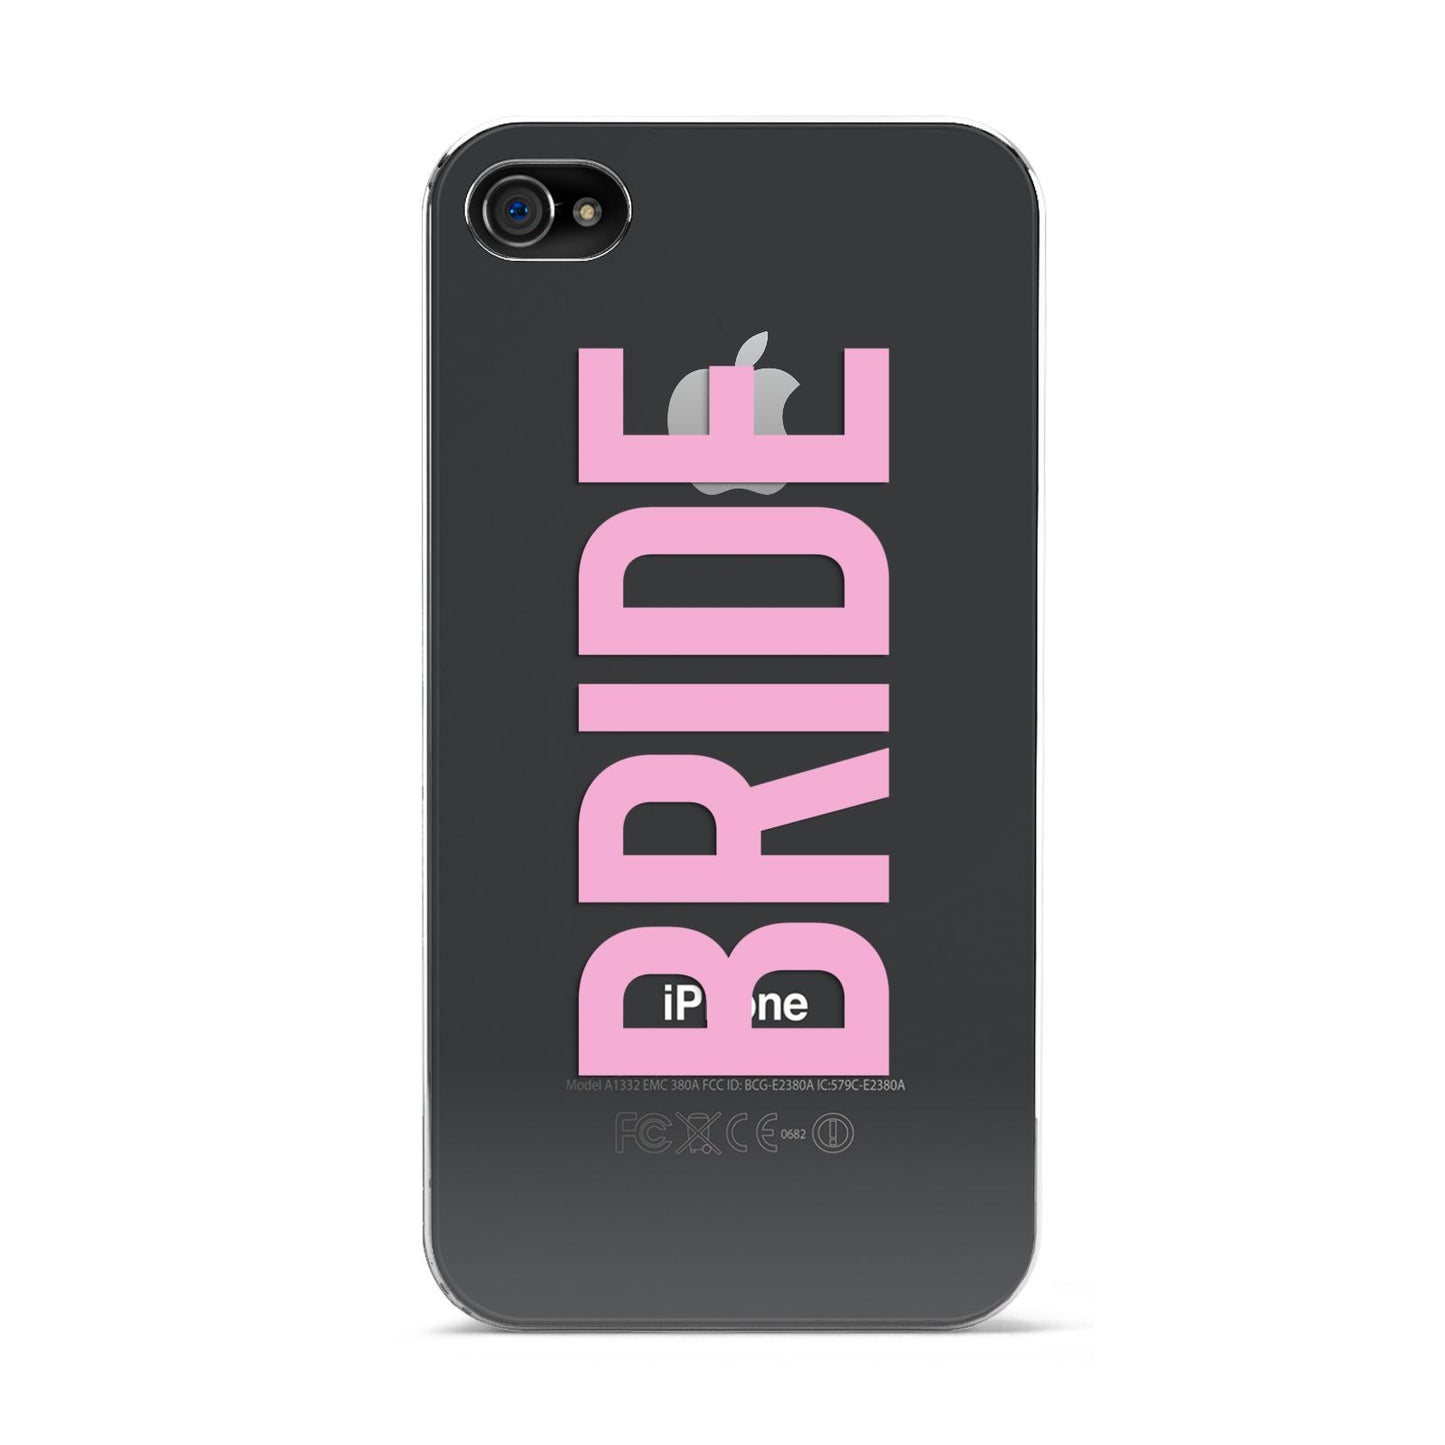 Bride Pink Apple iPhone 4s Case